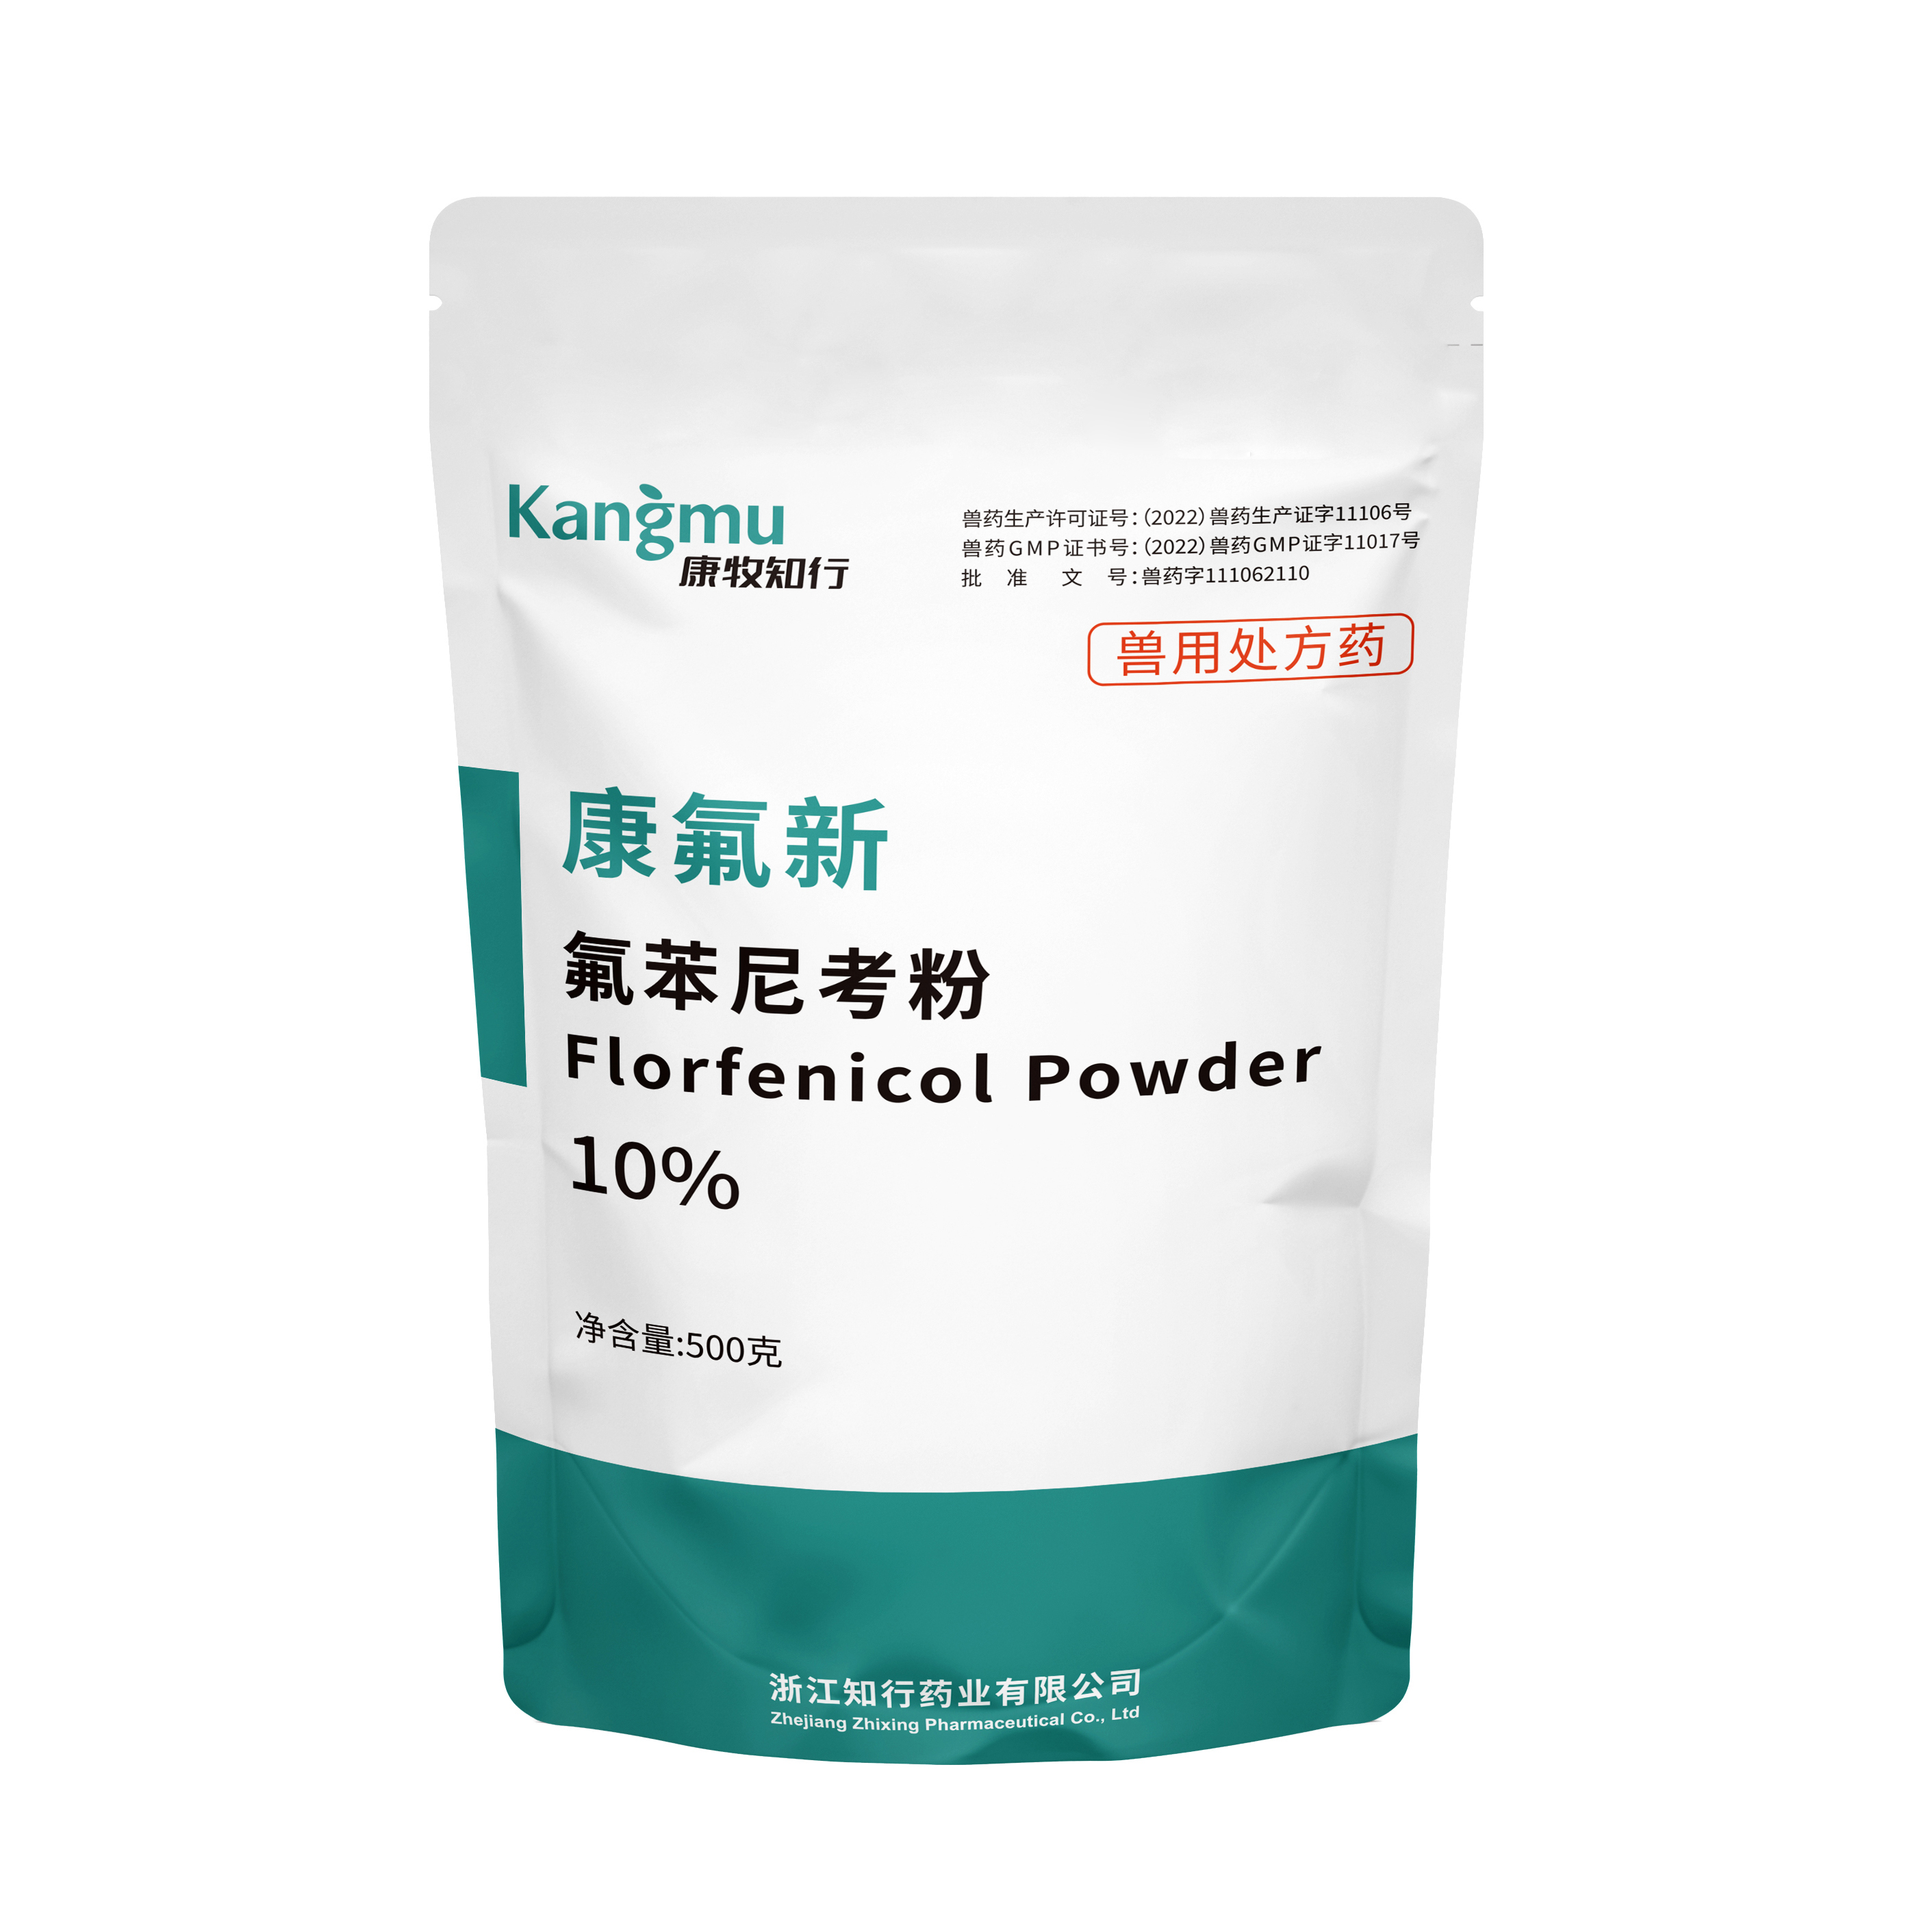 10% florfenicol powder